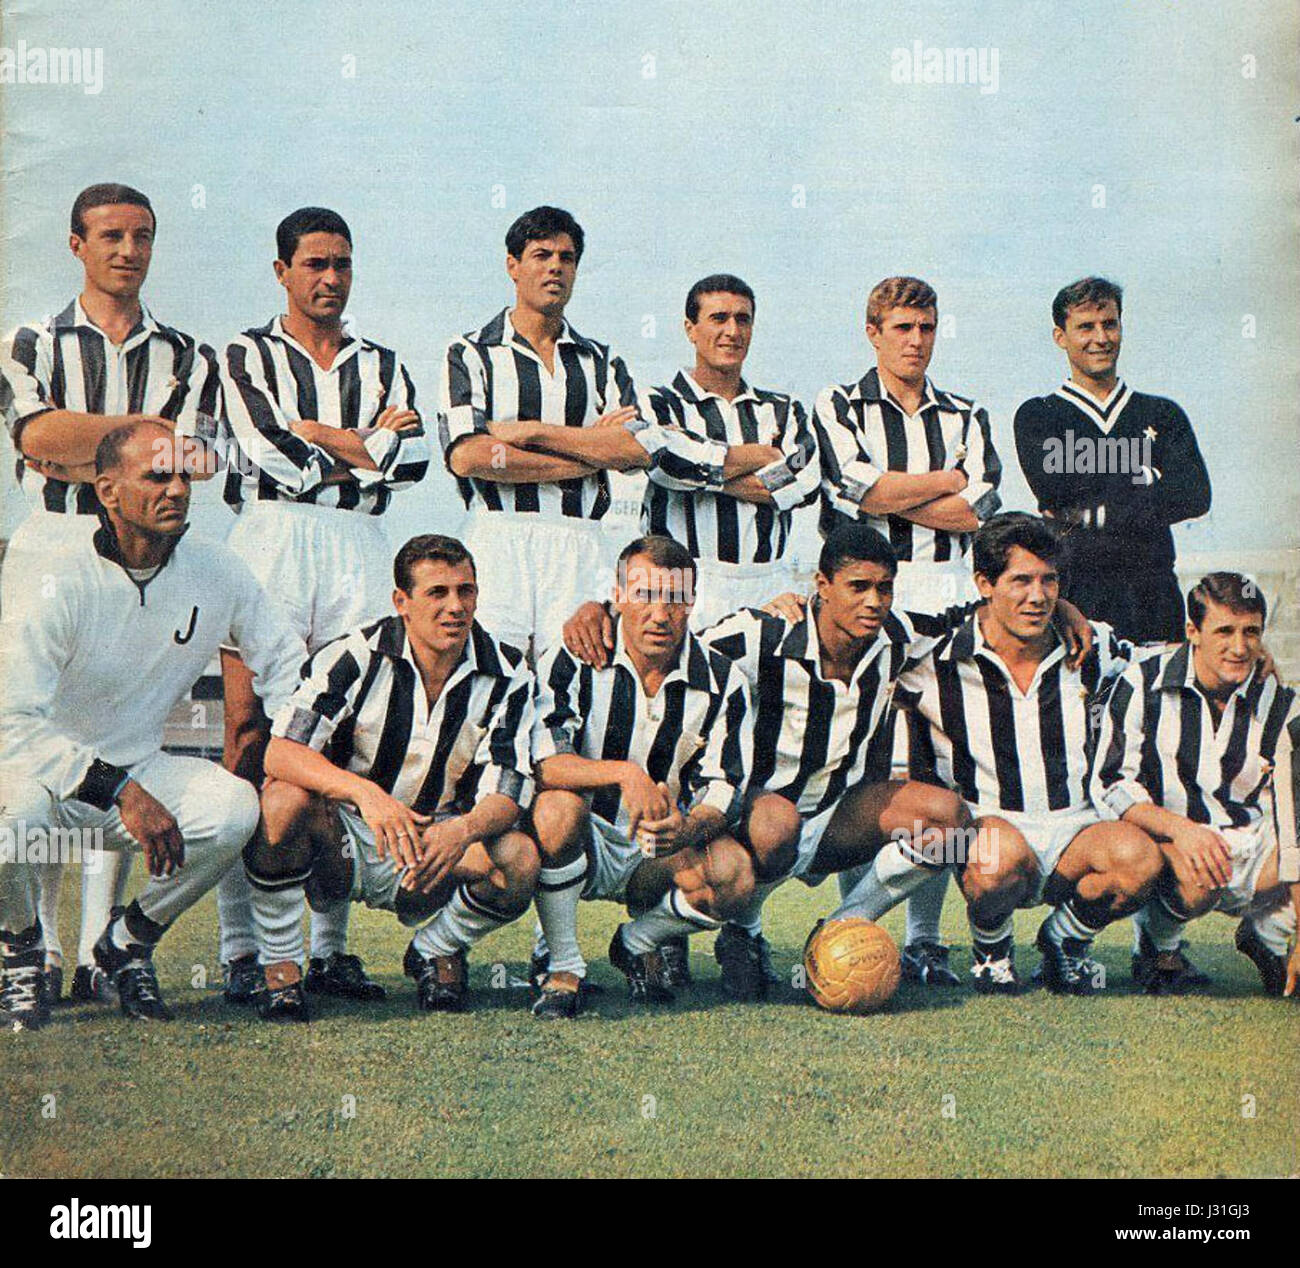 Juventus Football Club - História